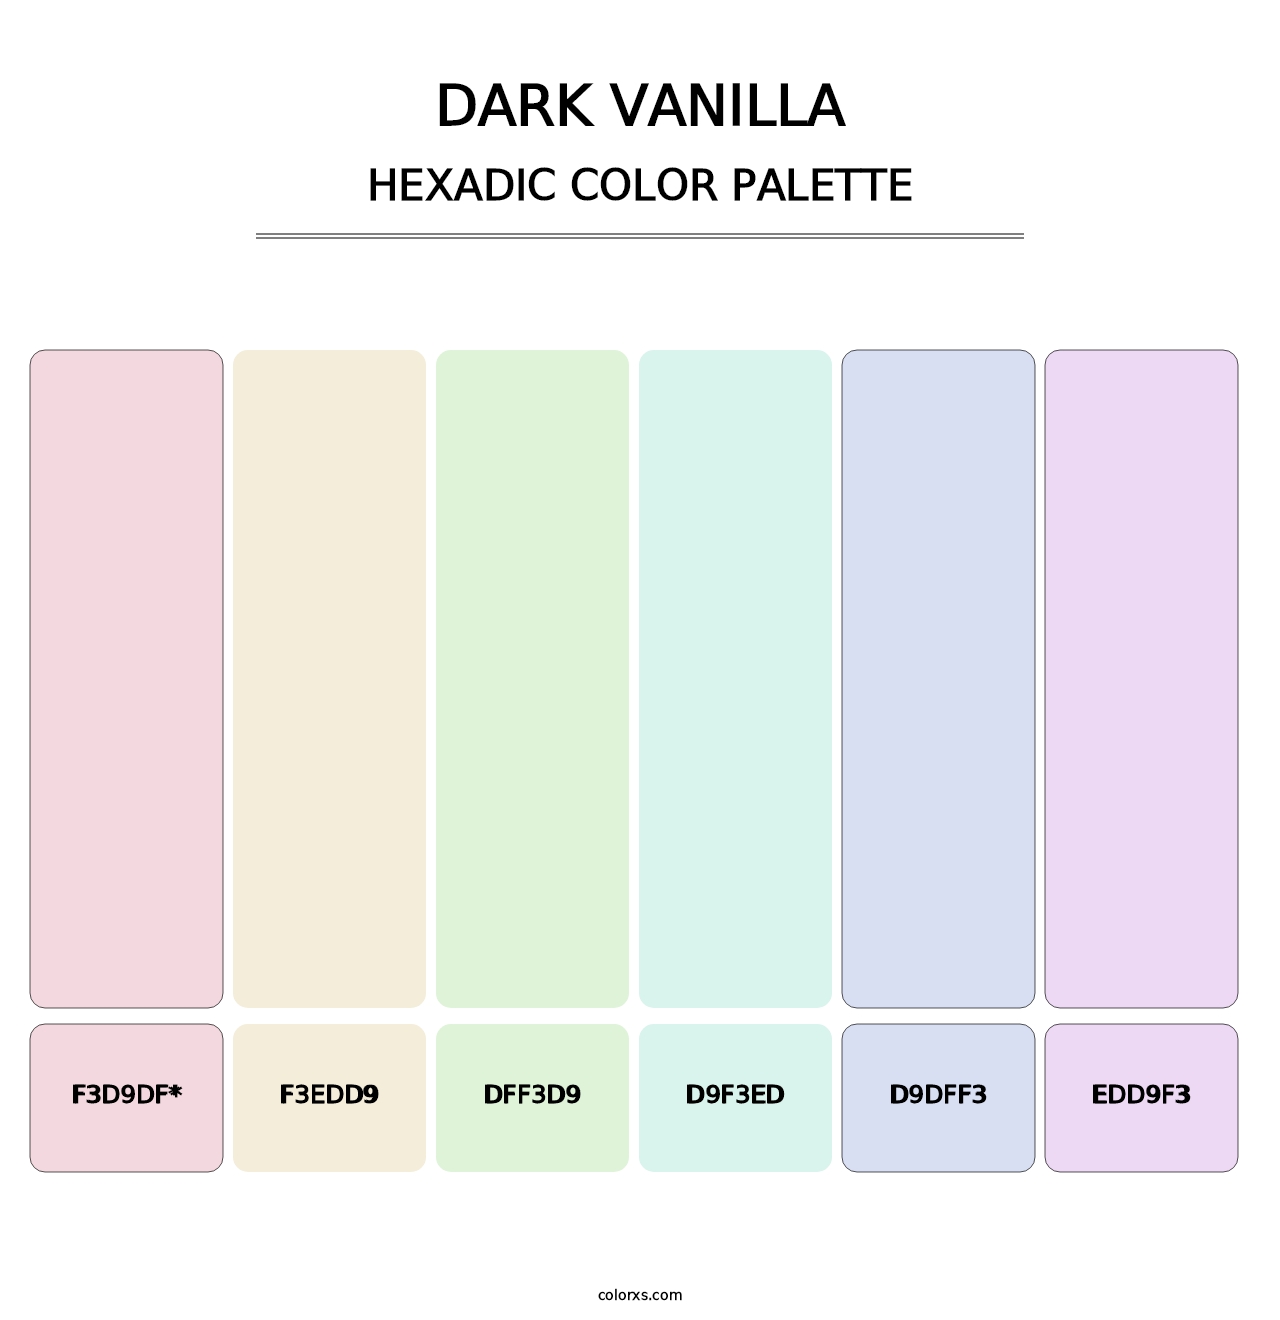 Dark Vanilla - Hexadic Color Palette